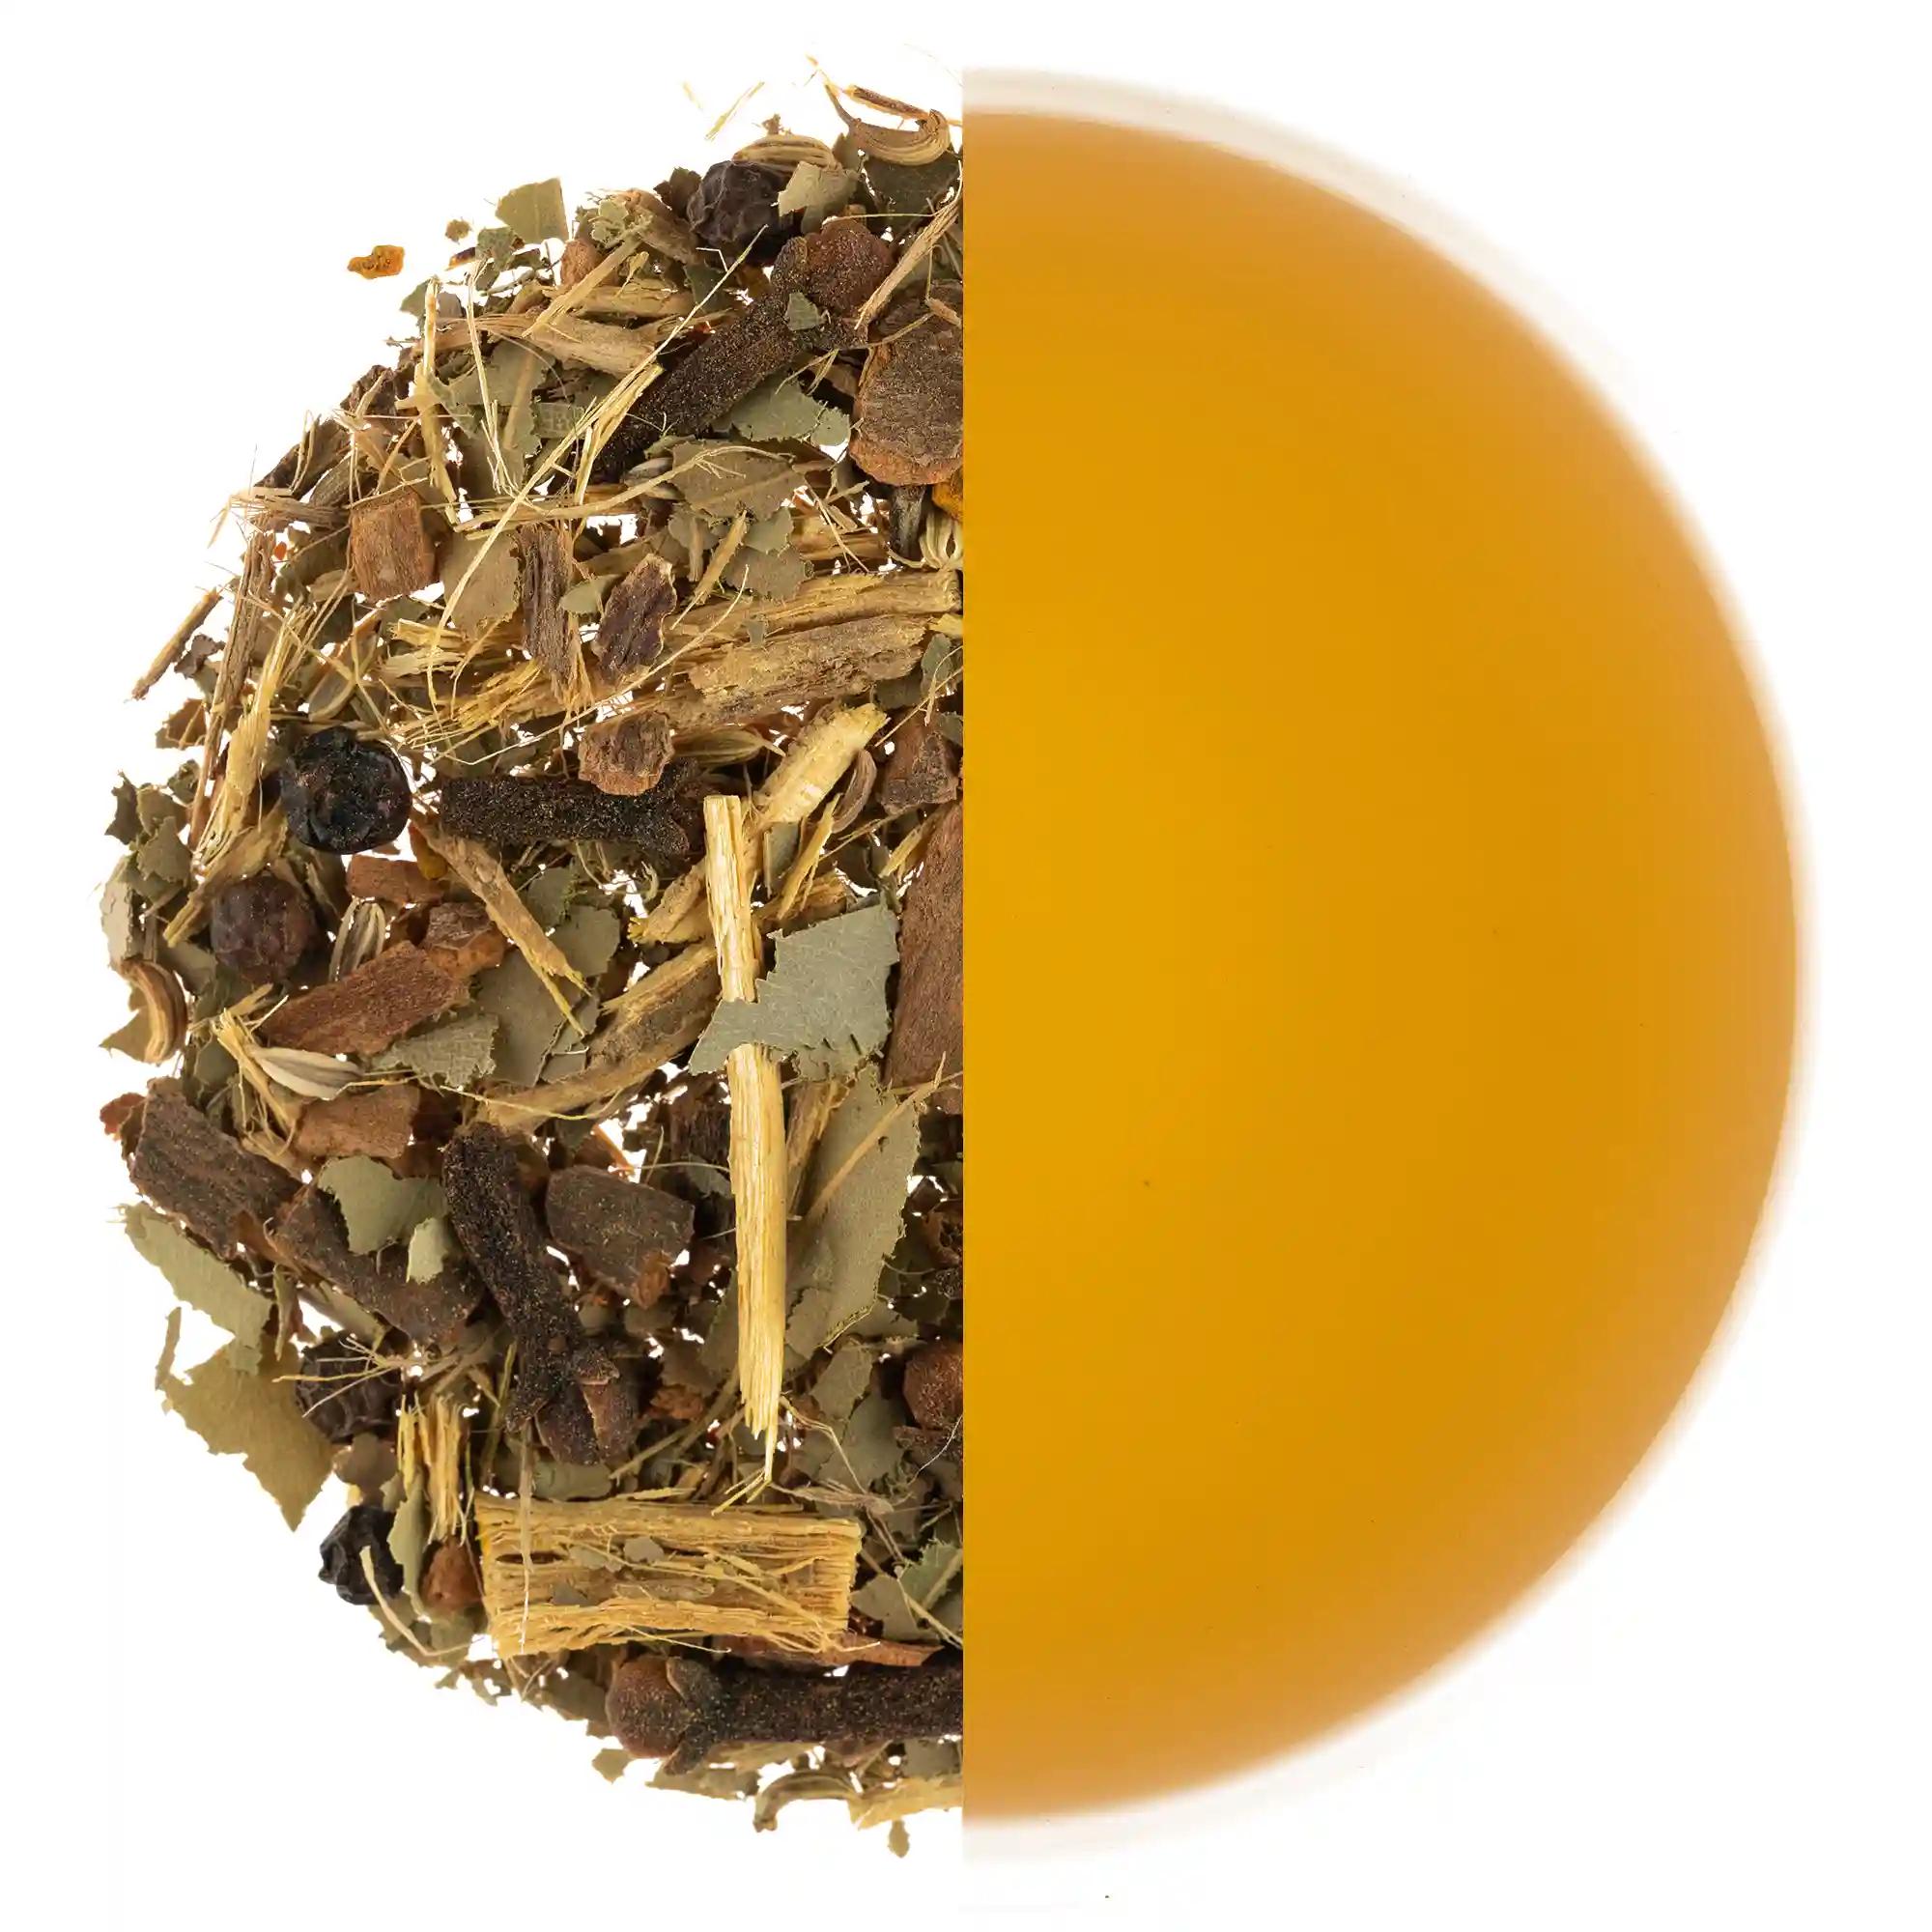 Liquorice Cinnamon Herbal Tea-  50 Gm Pouch